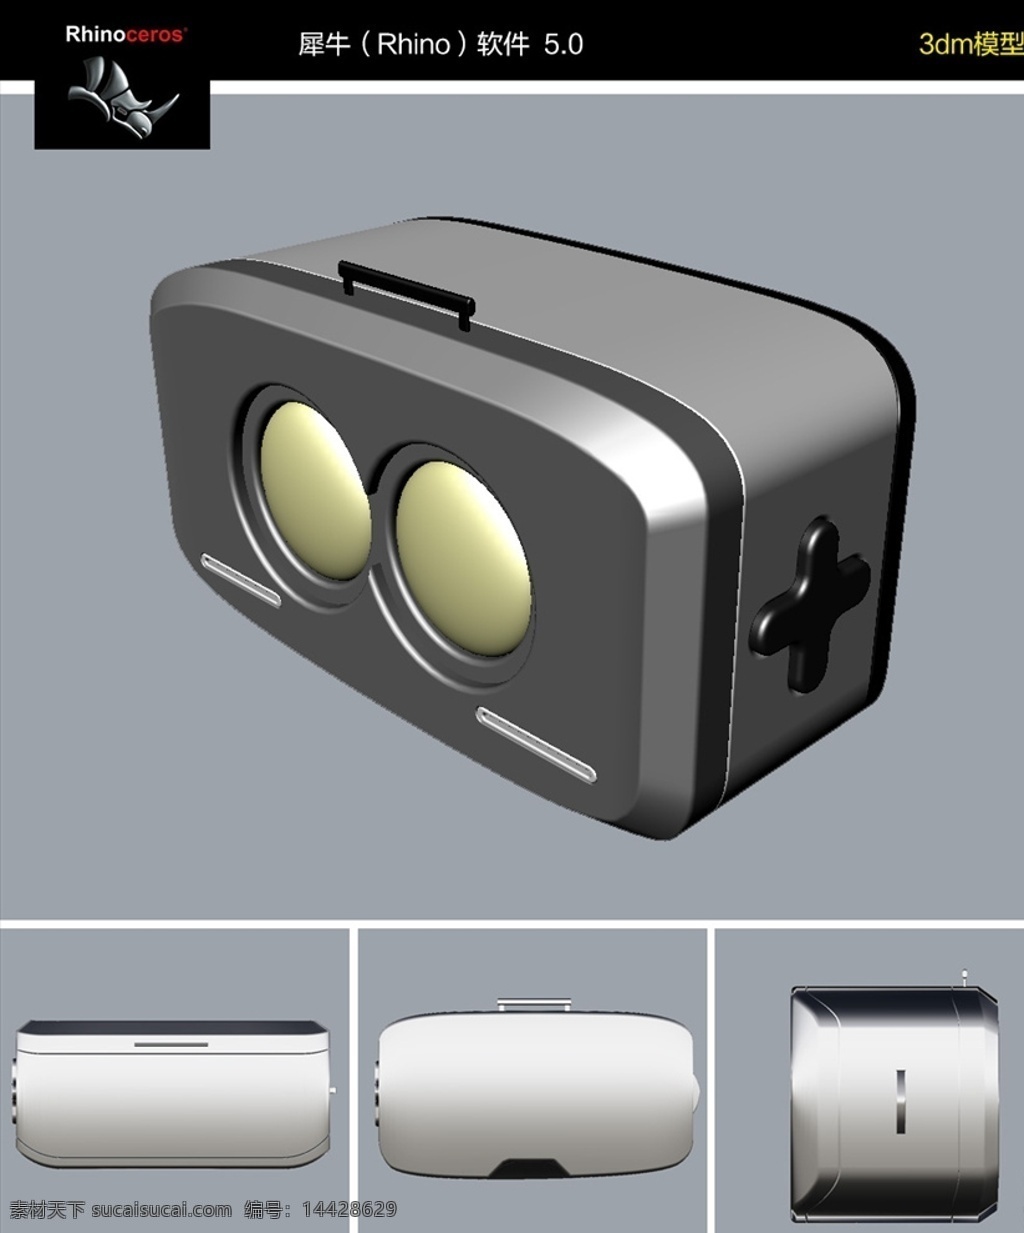 vr 眼镜 犀牛 rhino 模型 vr眼镜 工业设计 产品造型设计 犀牛软件建模 3d设计 3dm